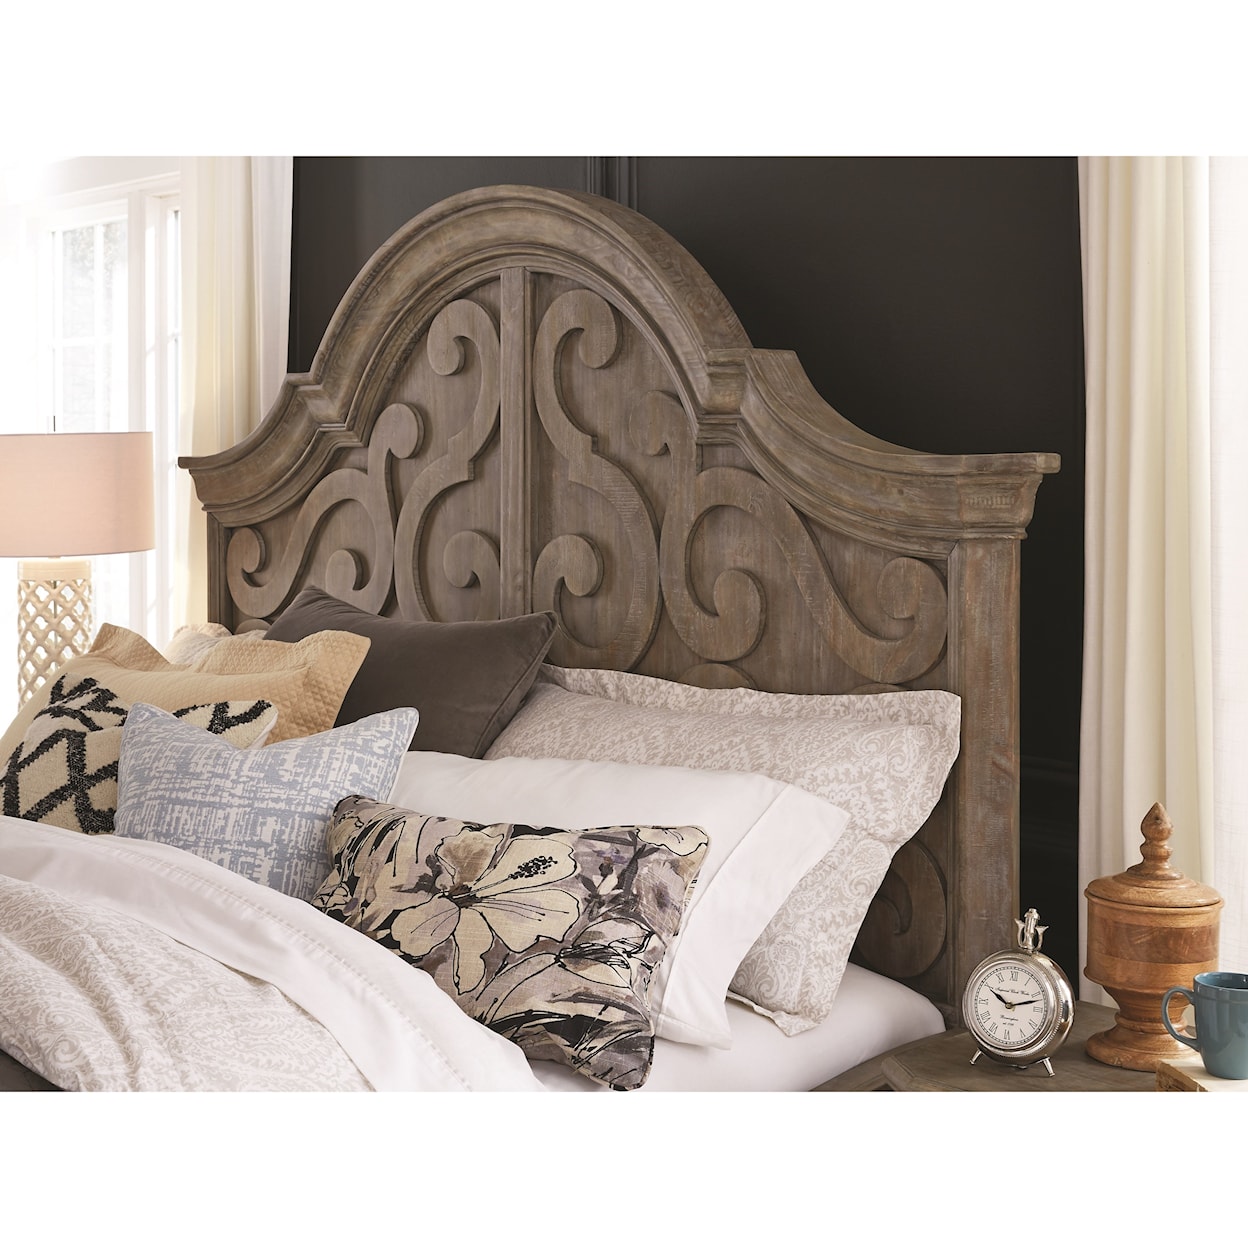 Magnussen Home Tinley Park Bedroom Queen Arched Panel Bed